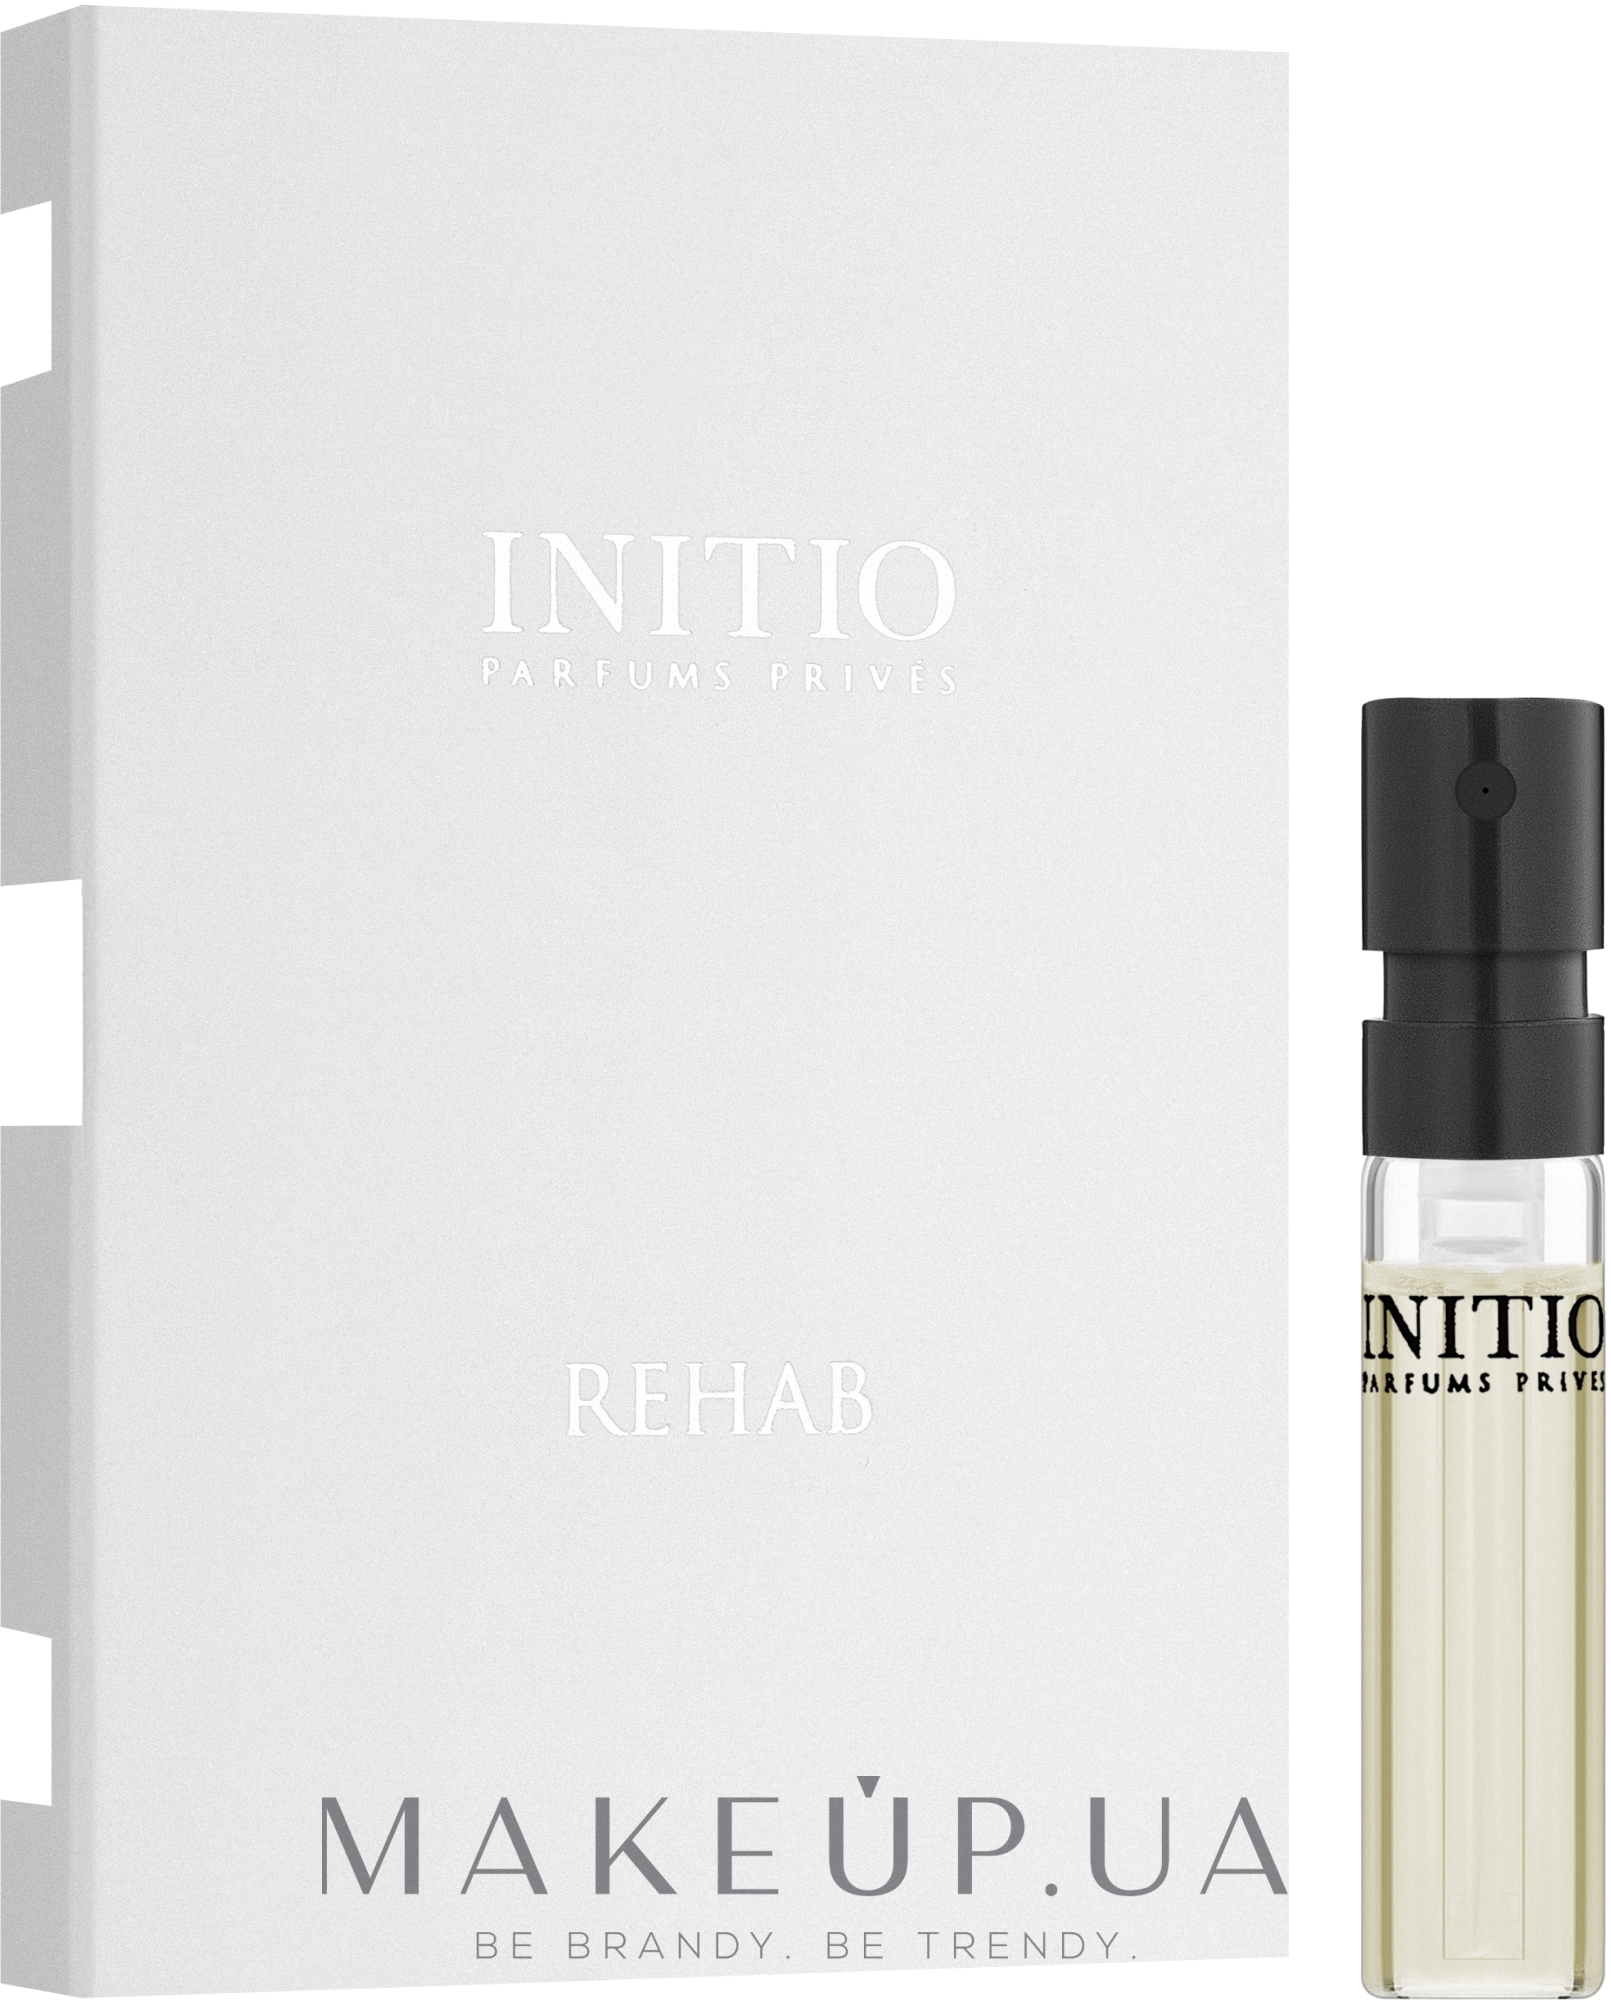 Initio Parfums Prives Rehab - Парфюмированная вода (пробник) — фото 1.5ml